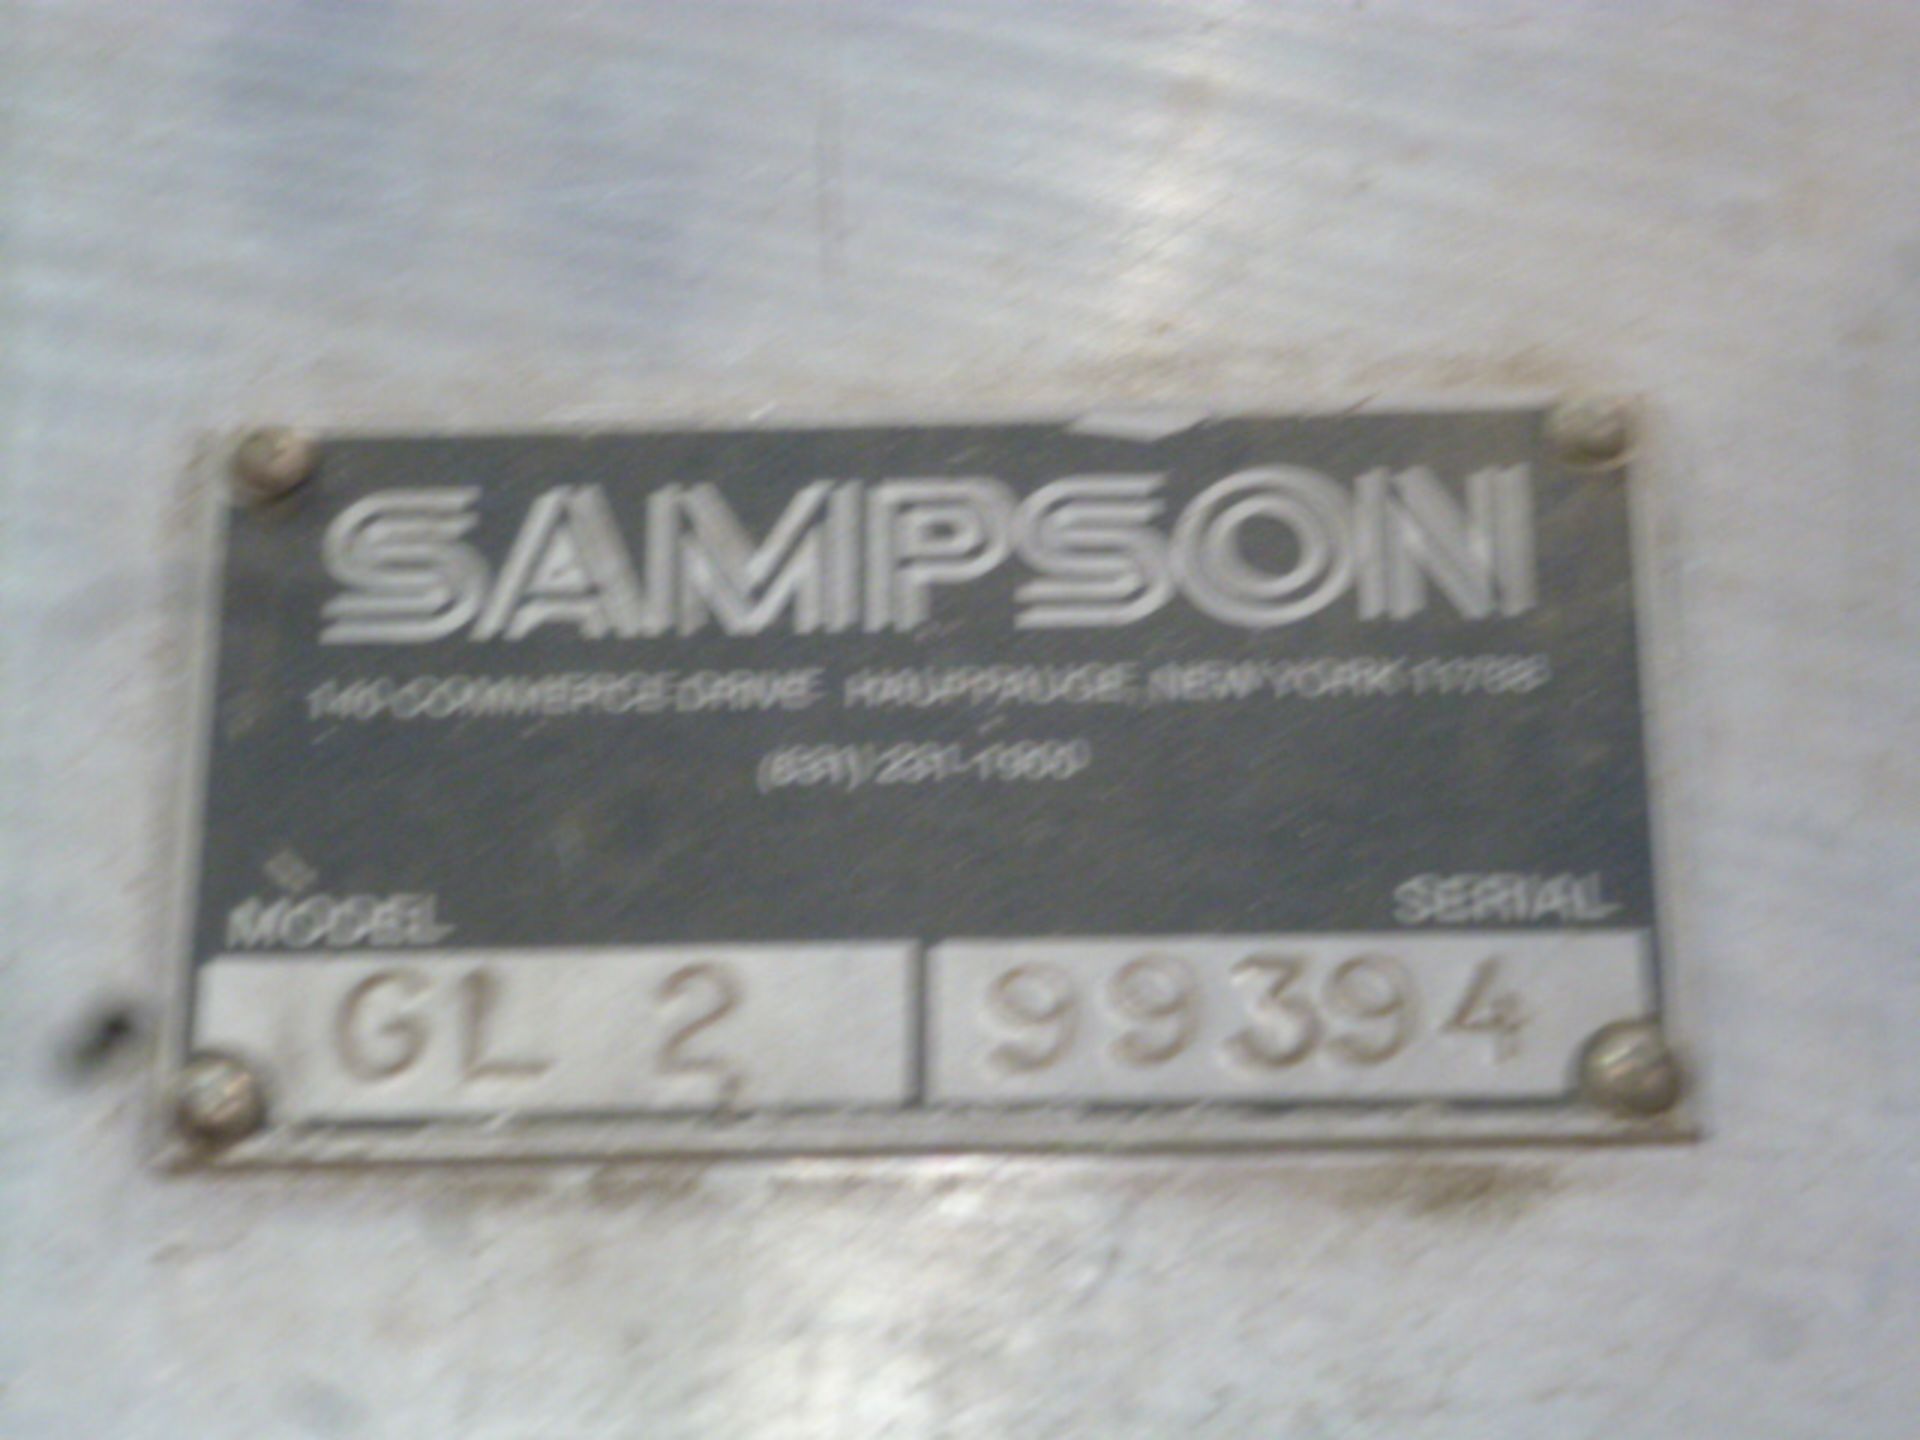 Sampson Glazing Bead Saw, m/n GL-2, s/n 99394 - Image 3 of 3